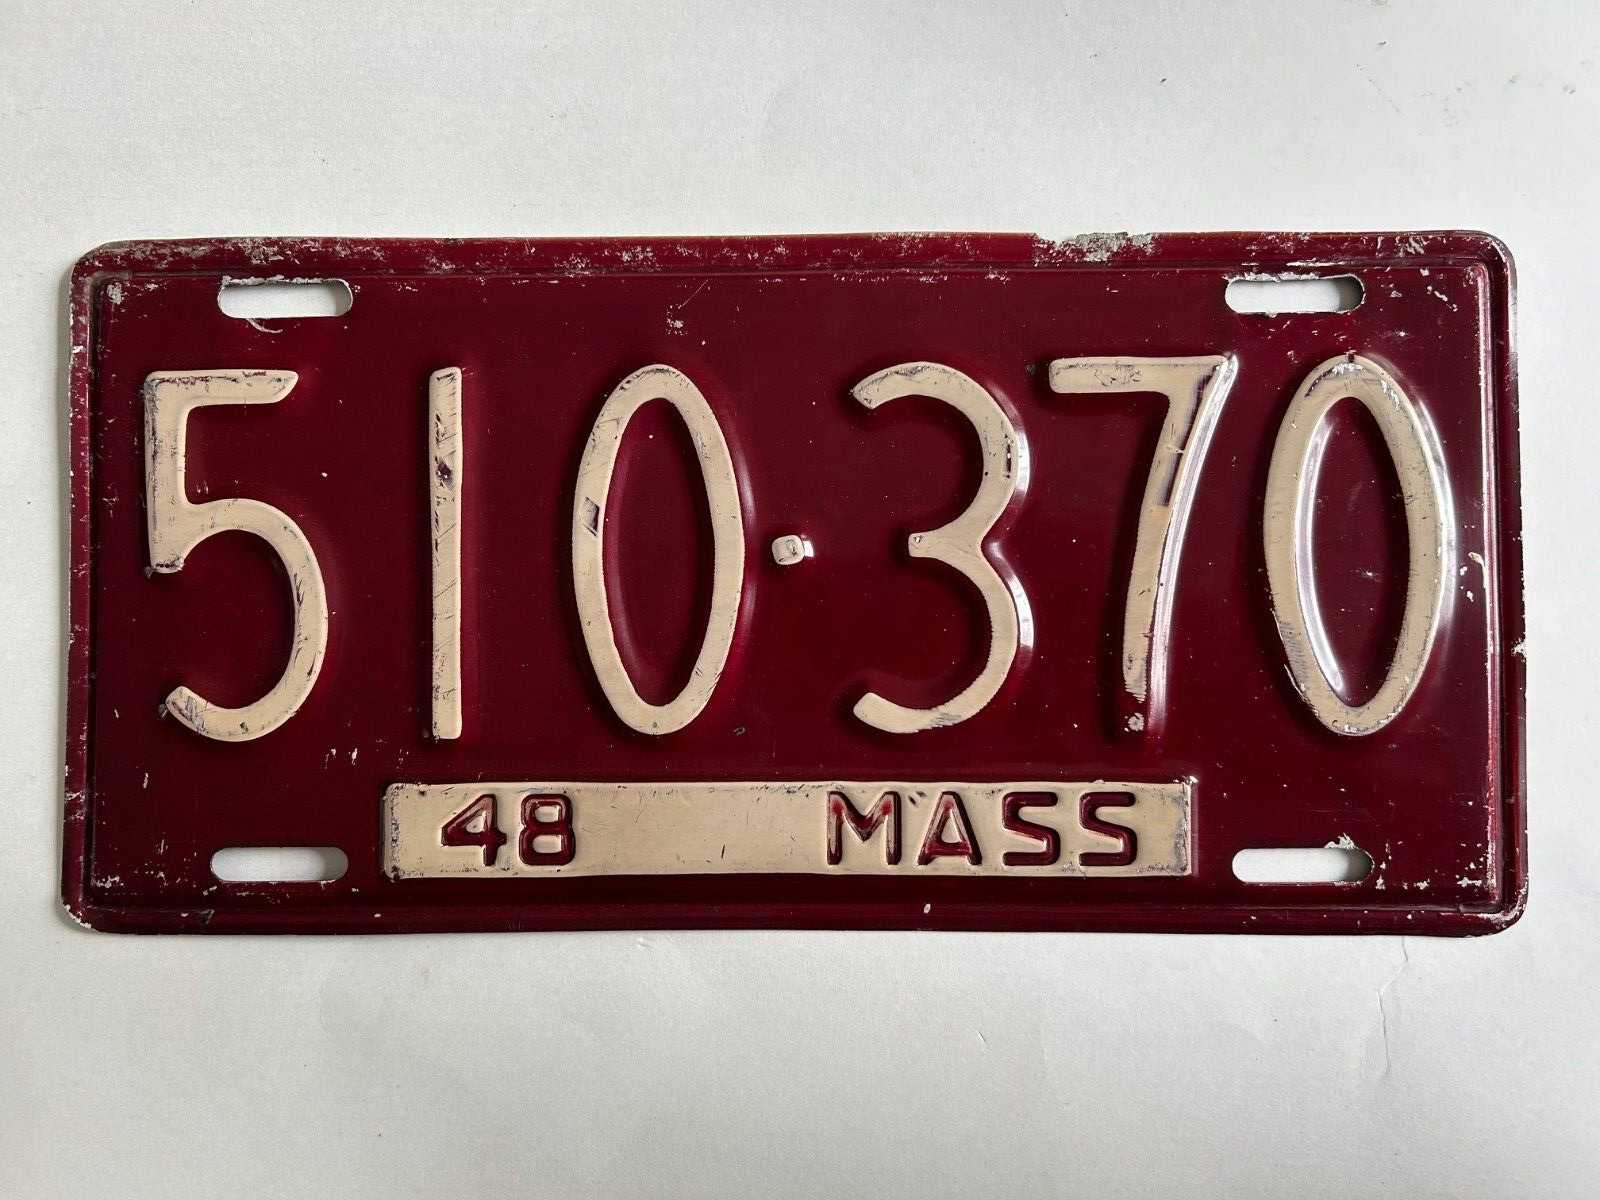 1948 Massachusetts License Plate Aluminum All Original Paint still Glossy